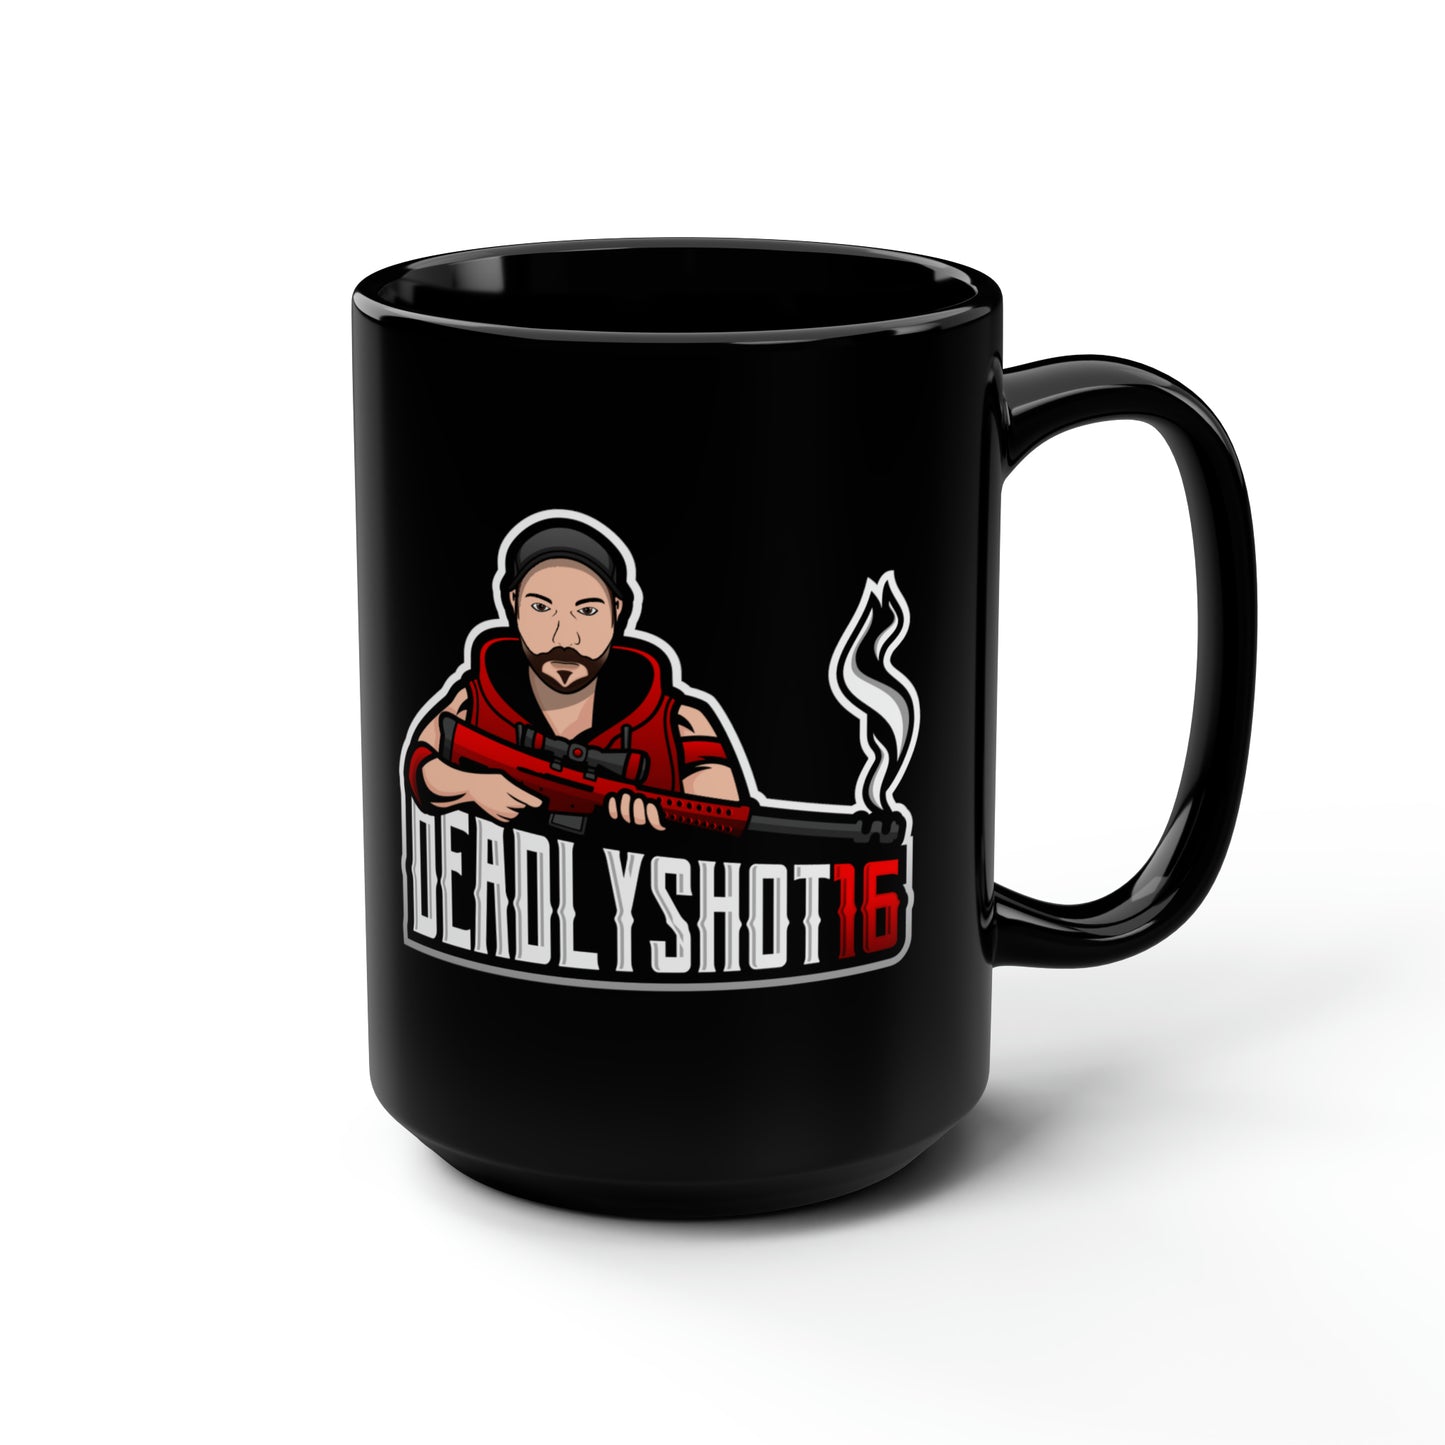 Deadlyshot16 Black Mug, 15oz